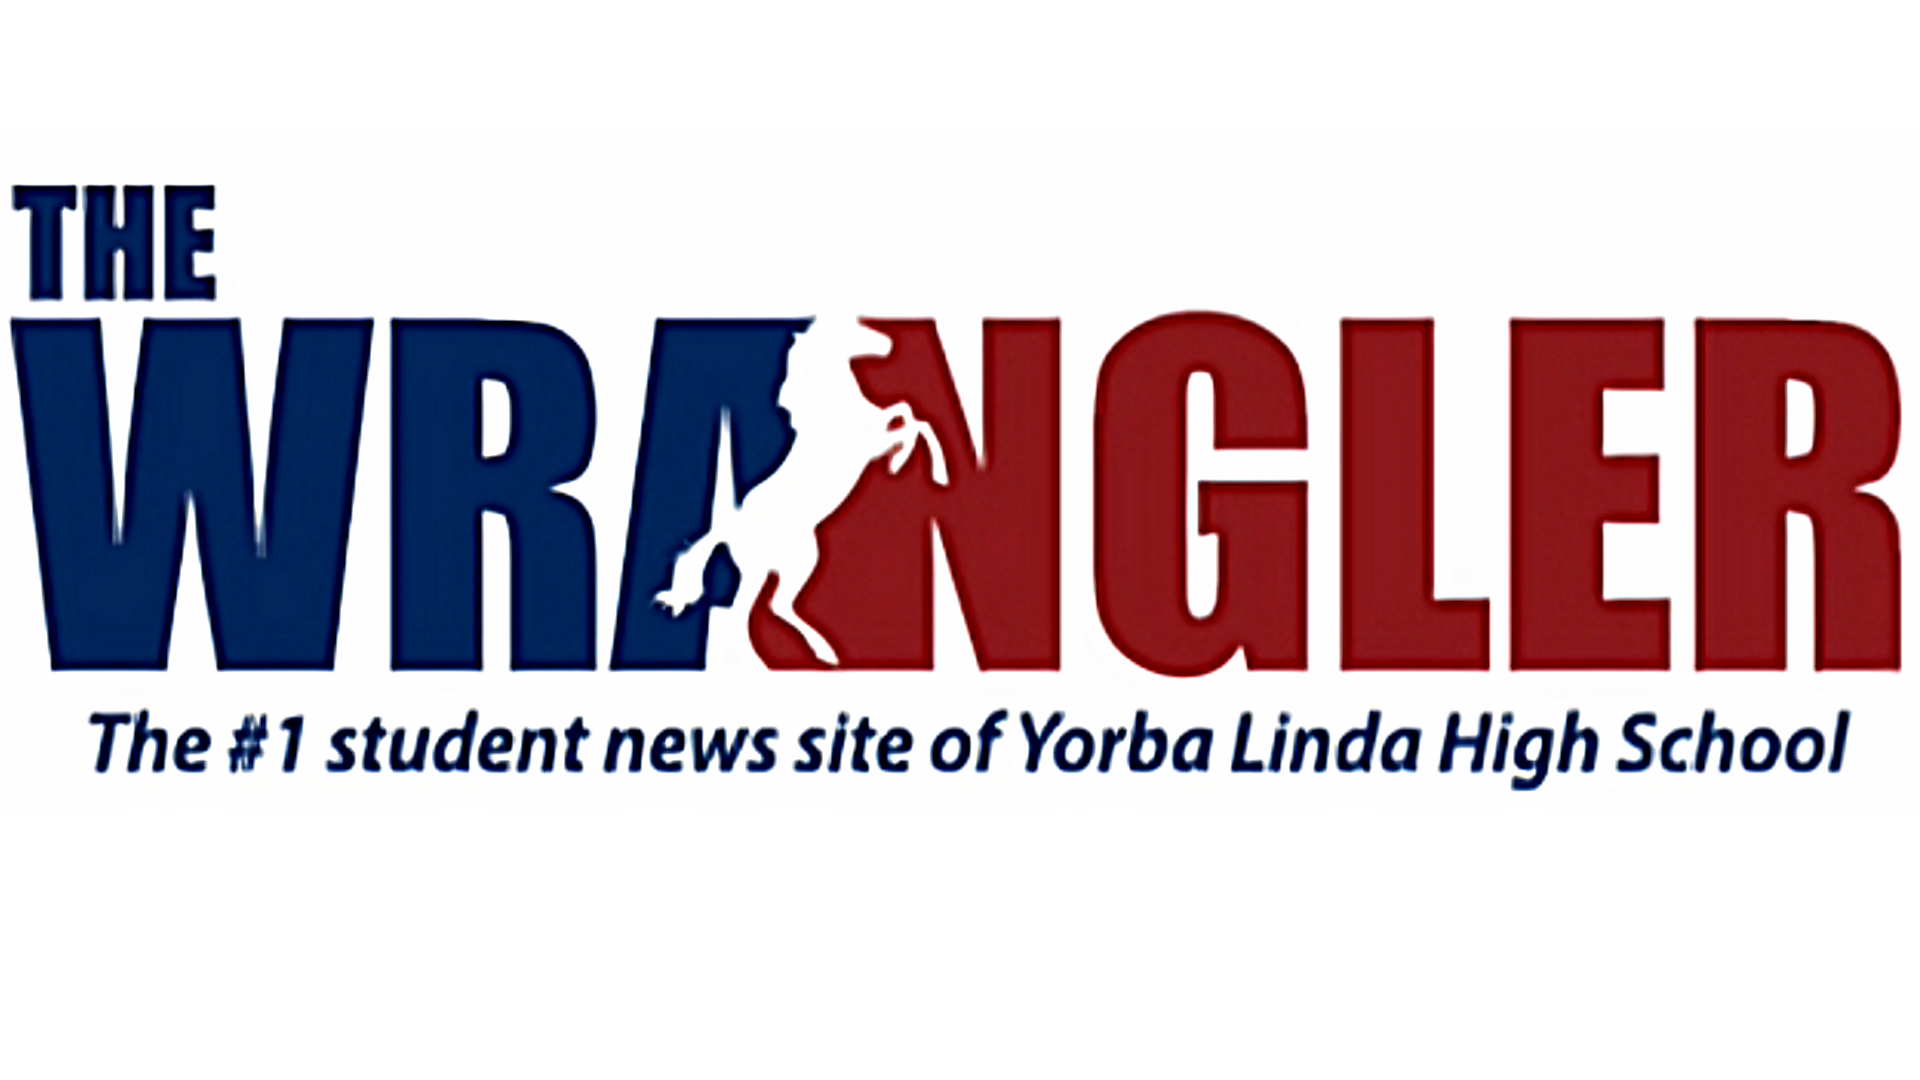 The #1 student news site of Yorba Linda High School